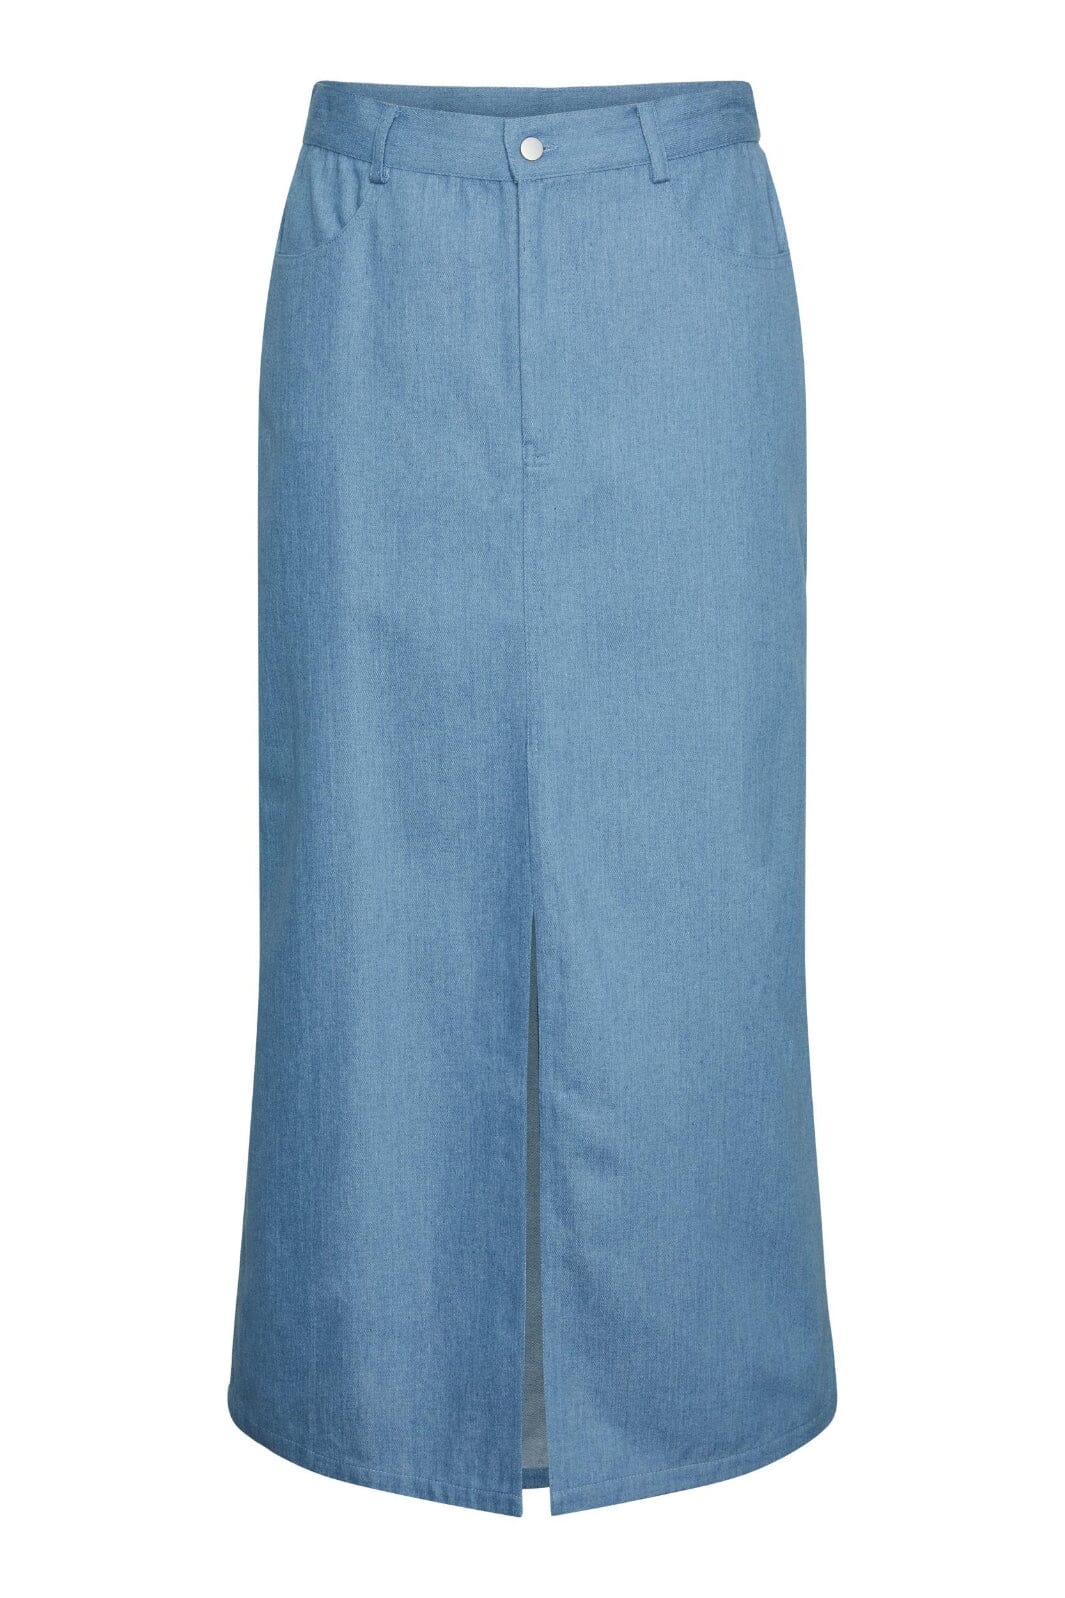 Pieces - Pcasta Long Skirt - 4503125 Light Blue Denim Nederdele 